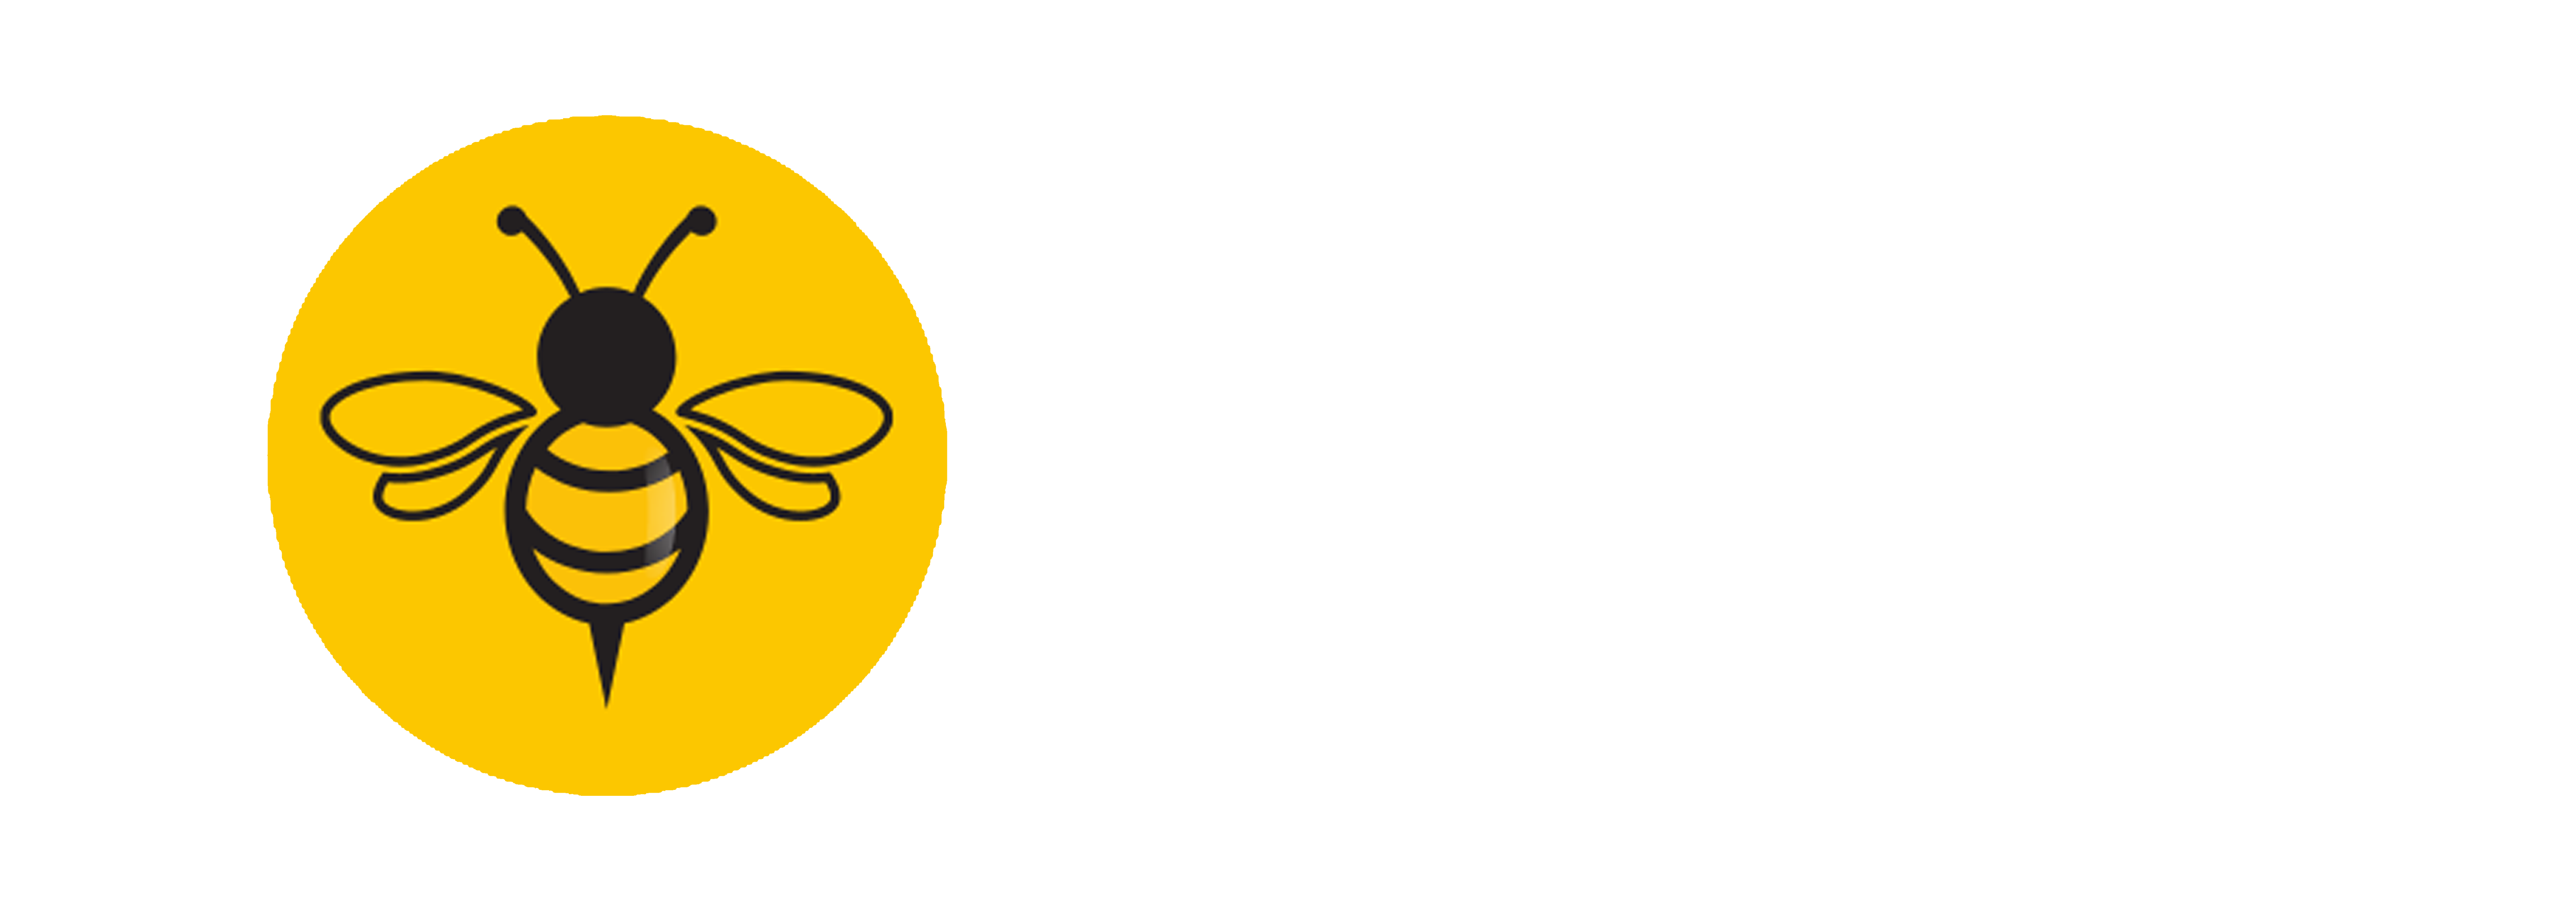 Buzz BD logo - white